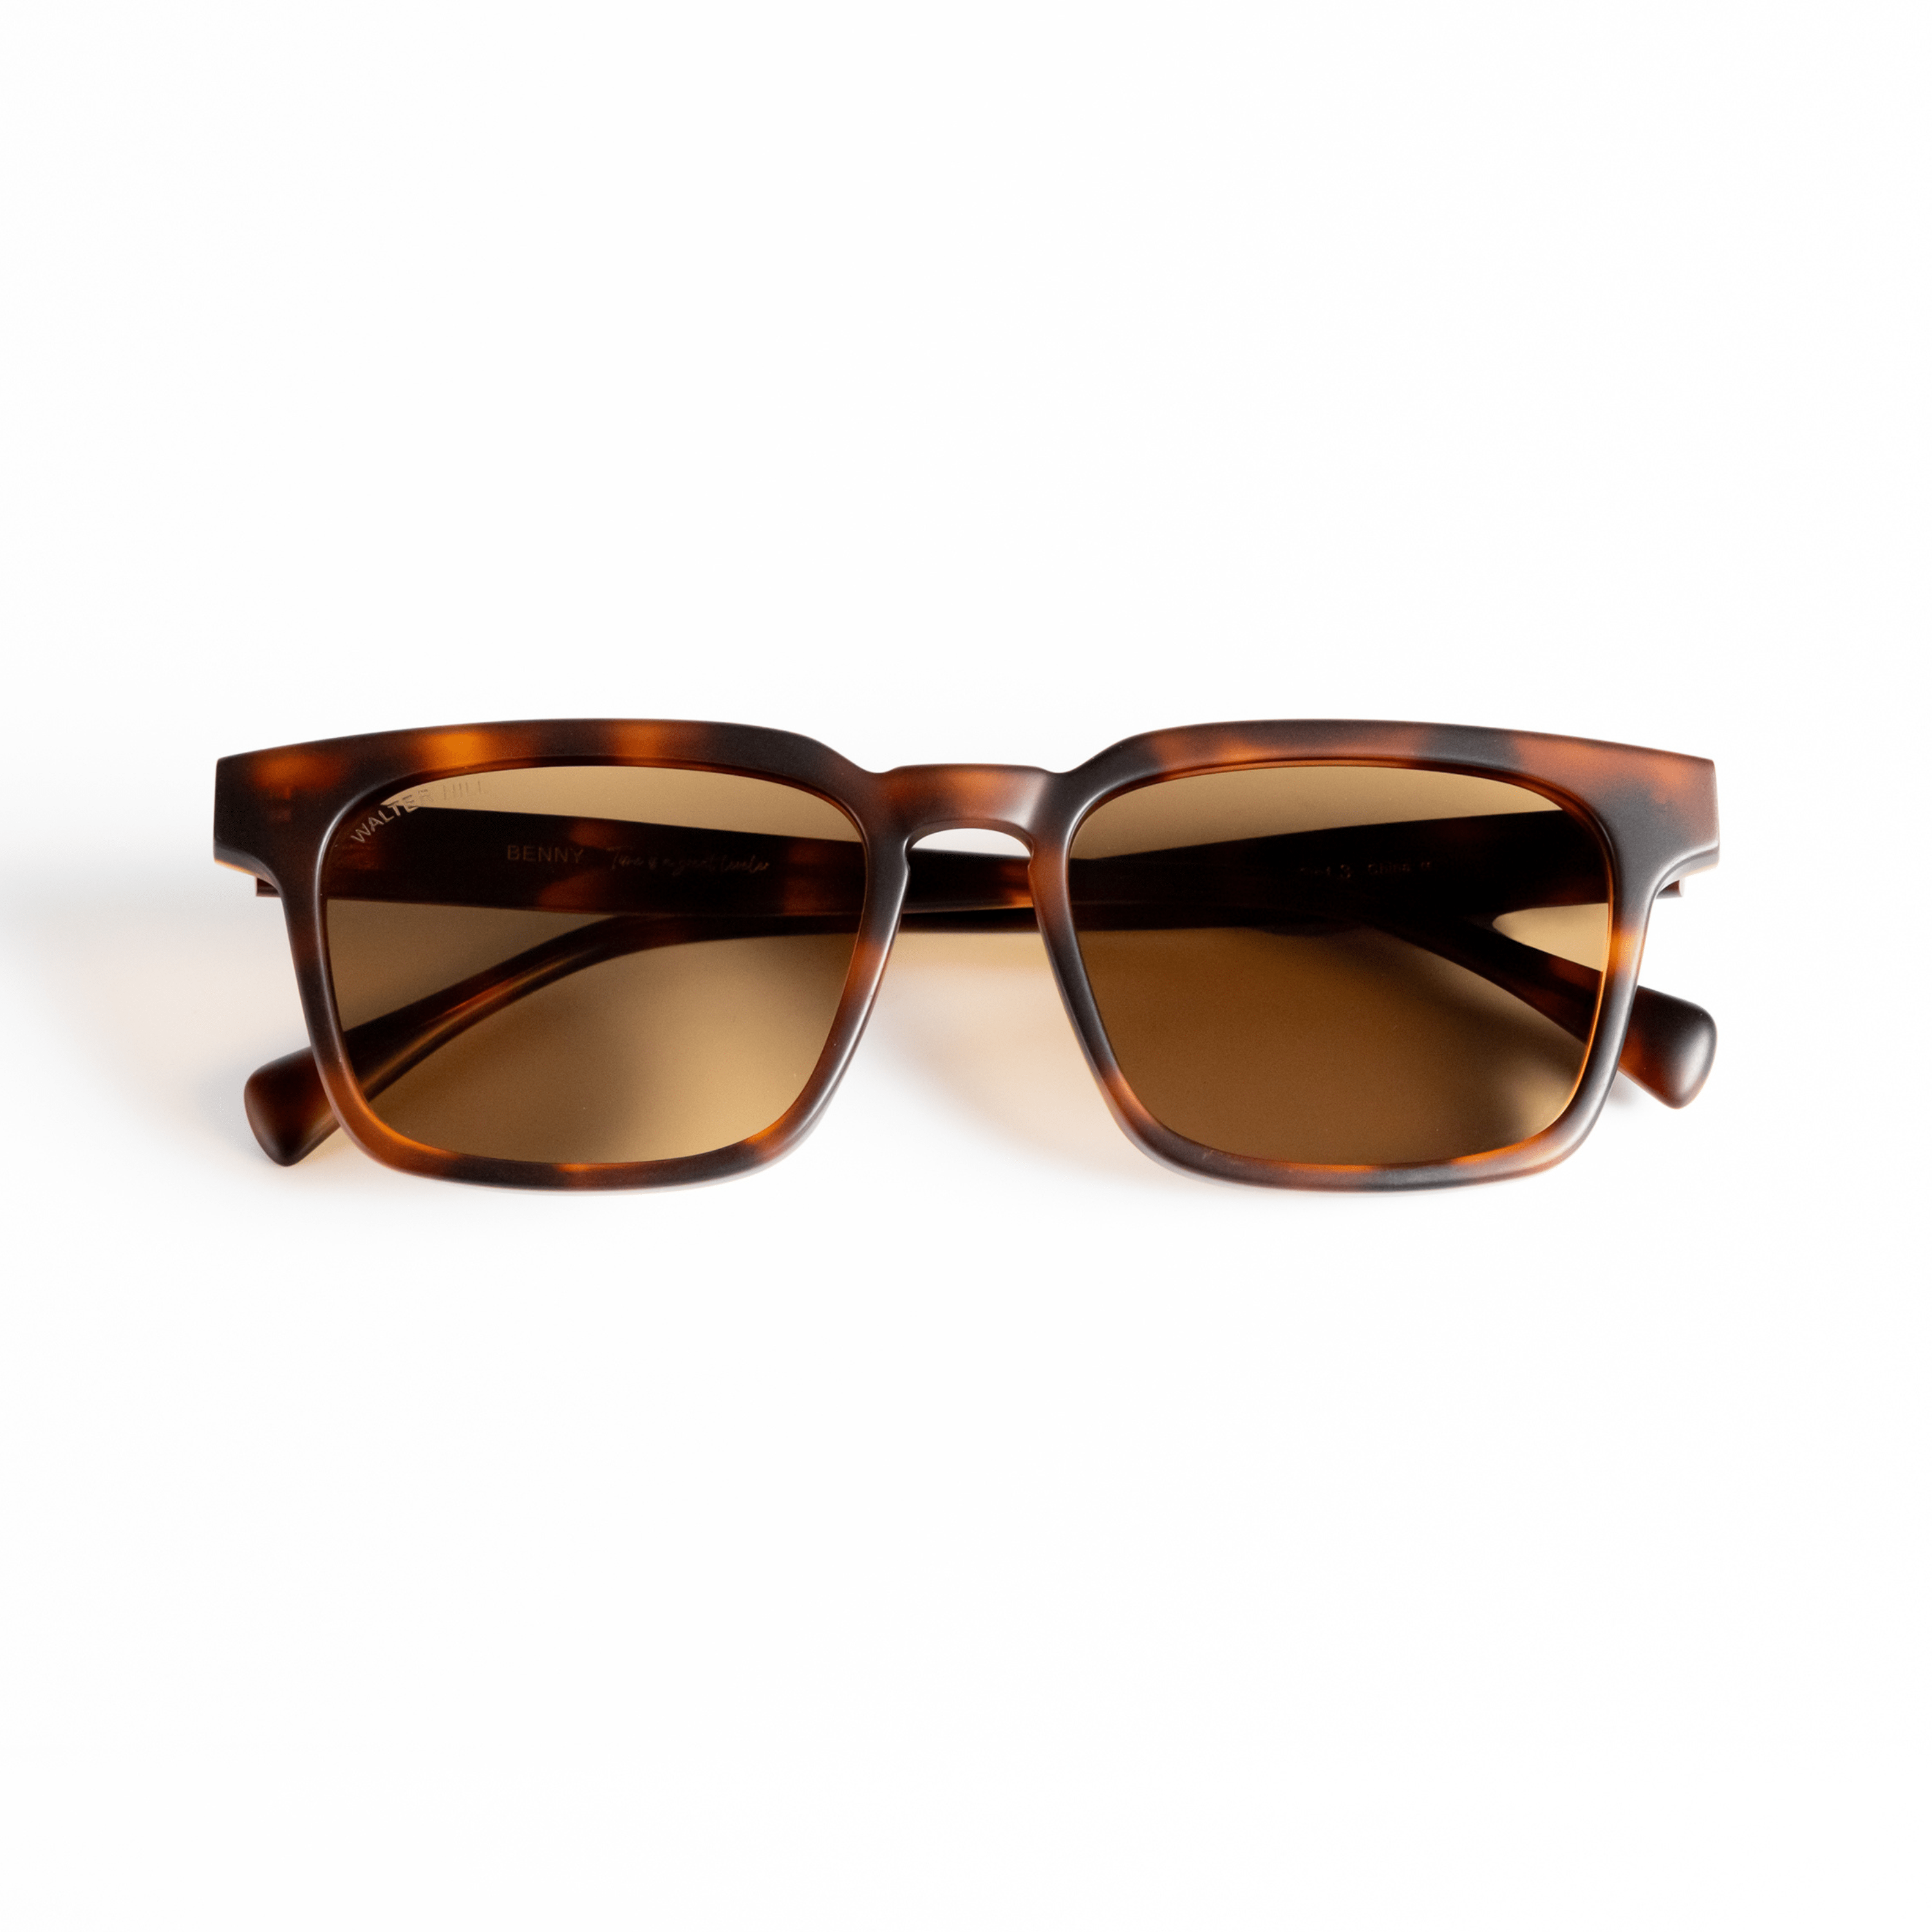 Walter Hill Sunglasses Oversized / Polarized Cat.3 / Mazzucchelli Acetate BENNY - Havana